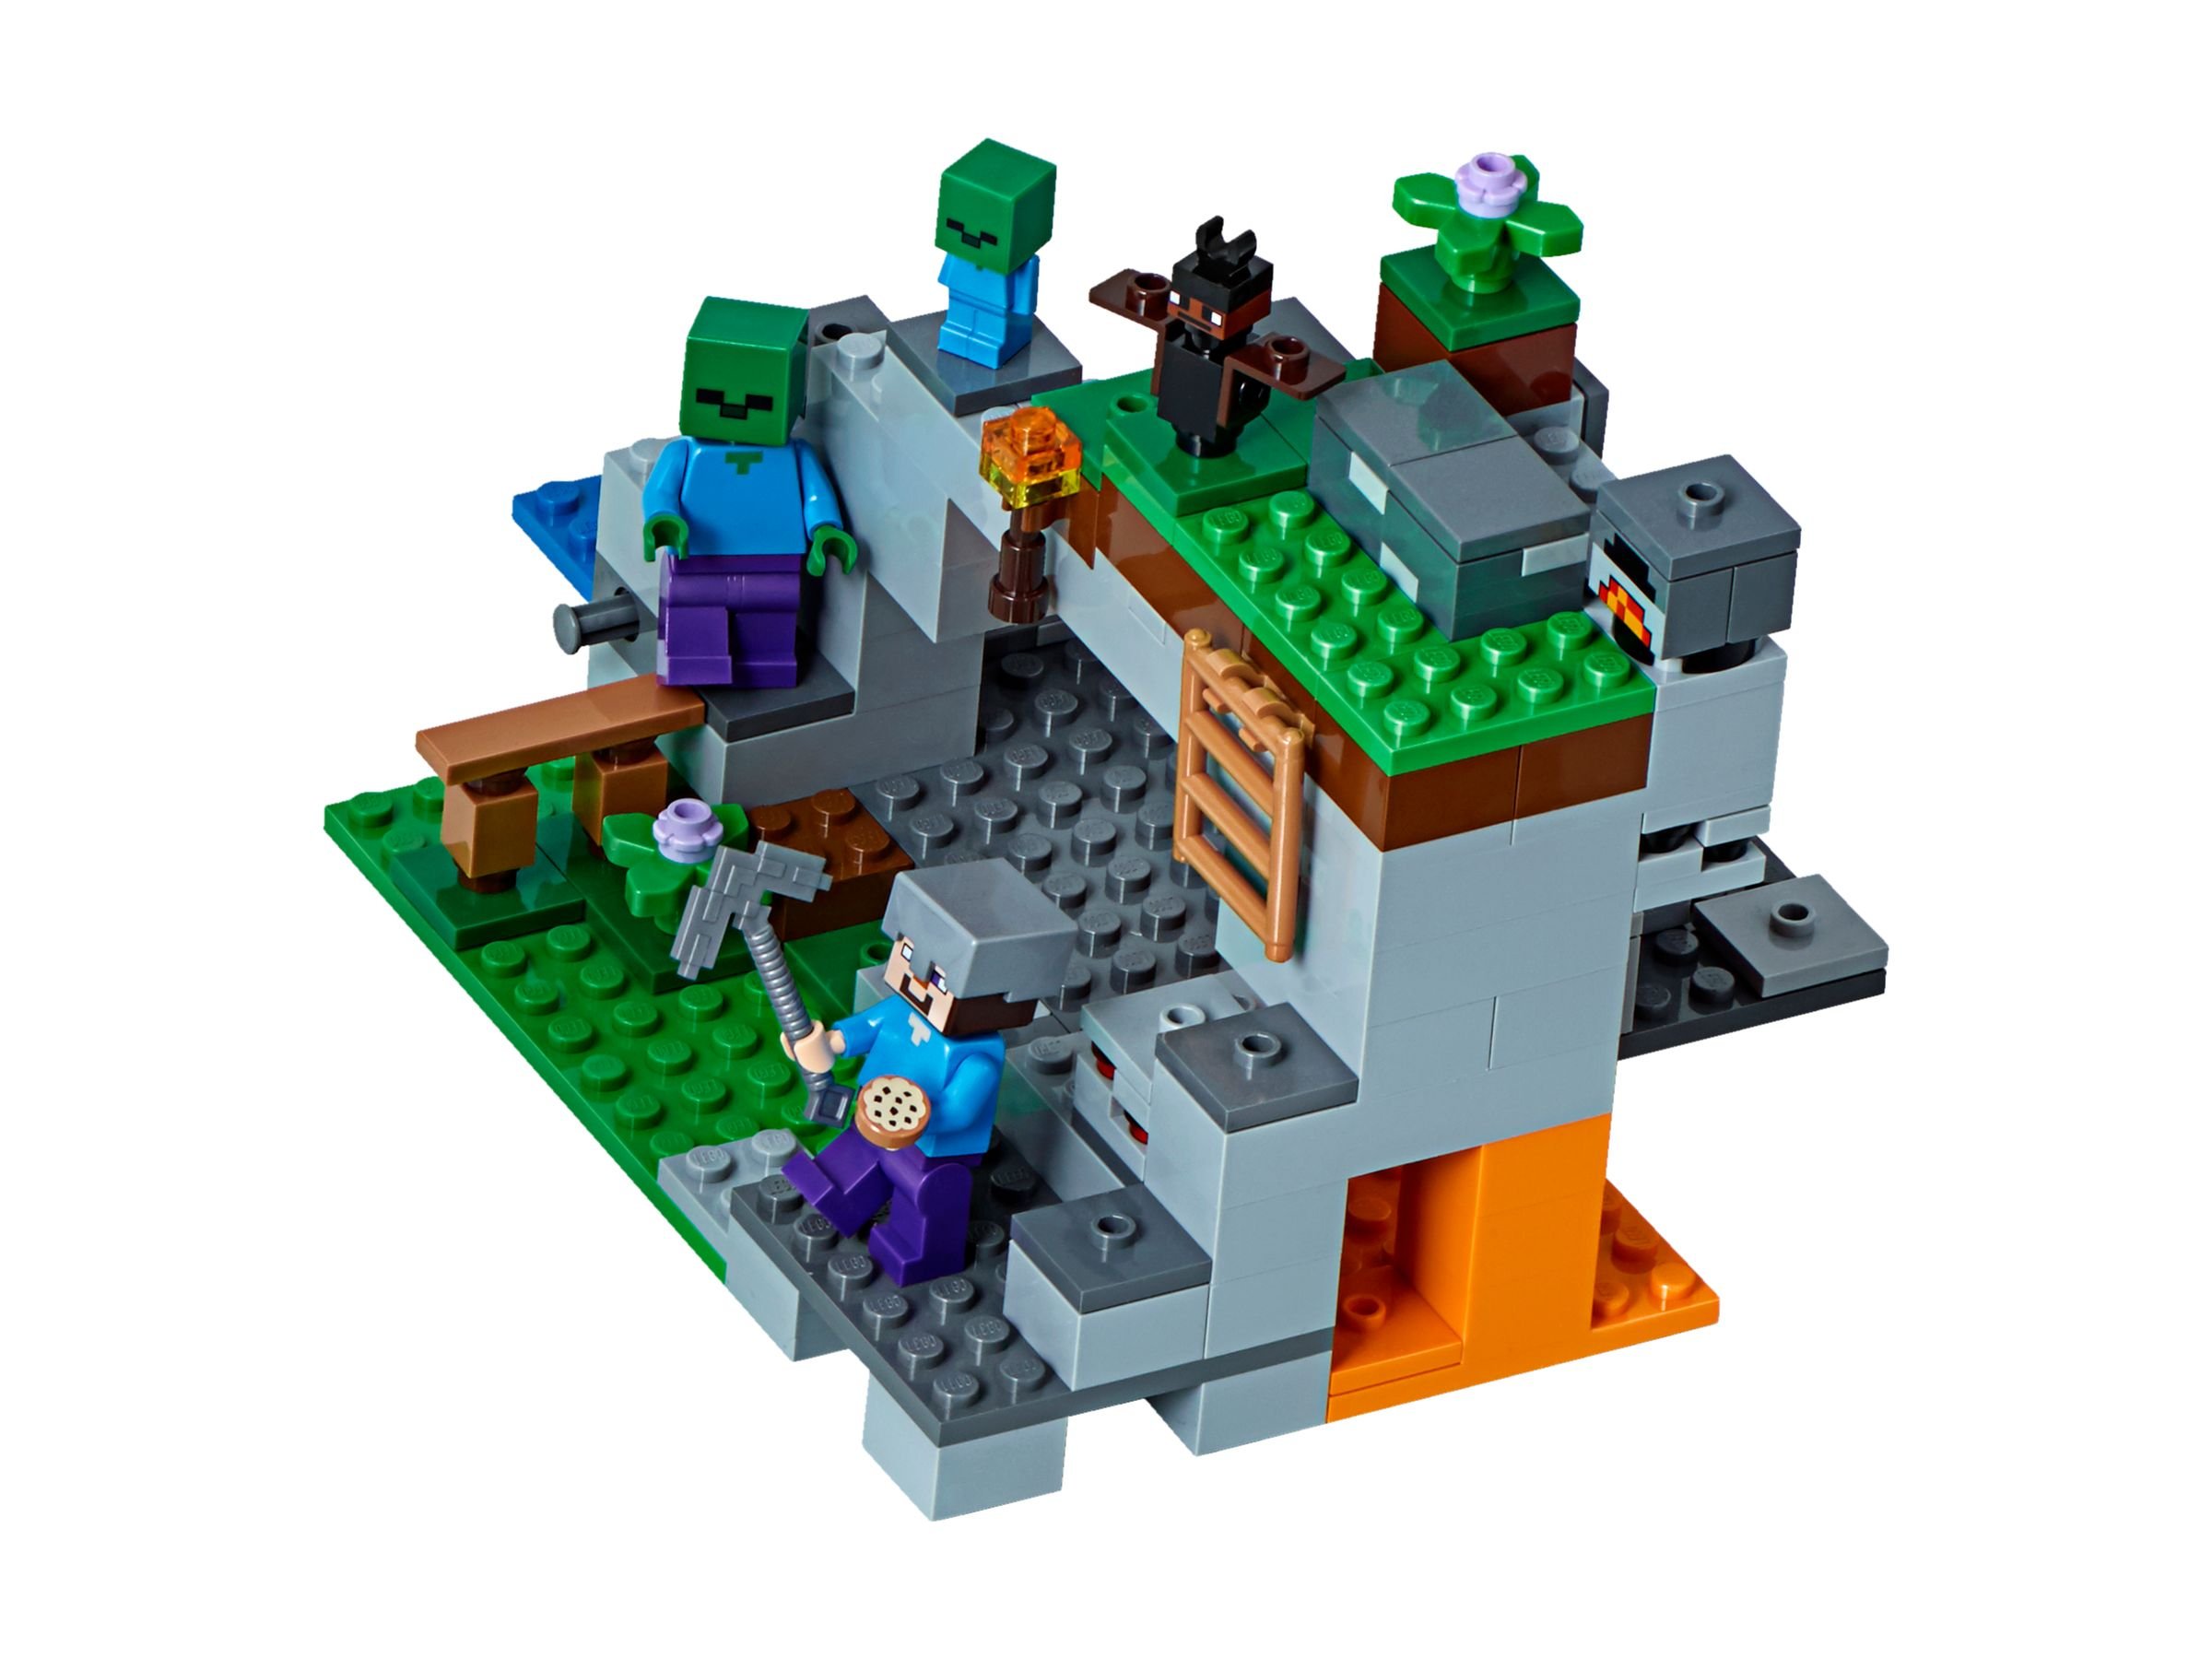 LEGO Minecraft Zombiehöhle 21141